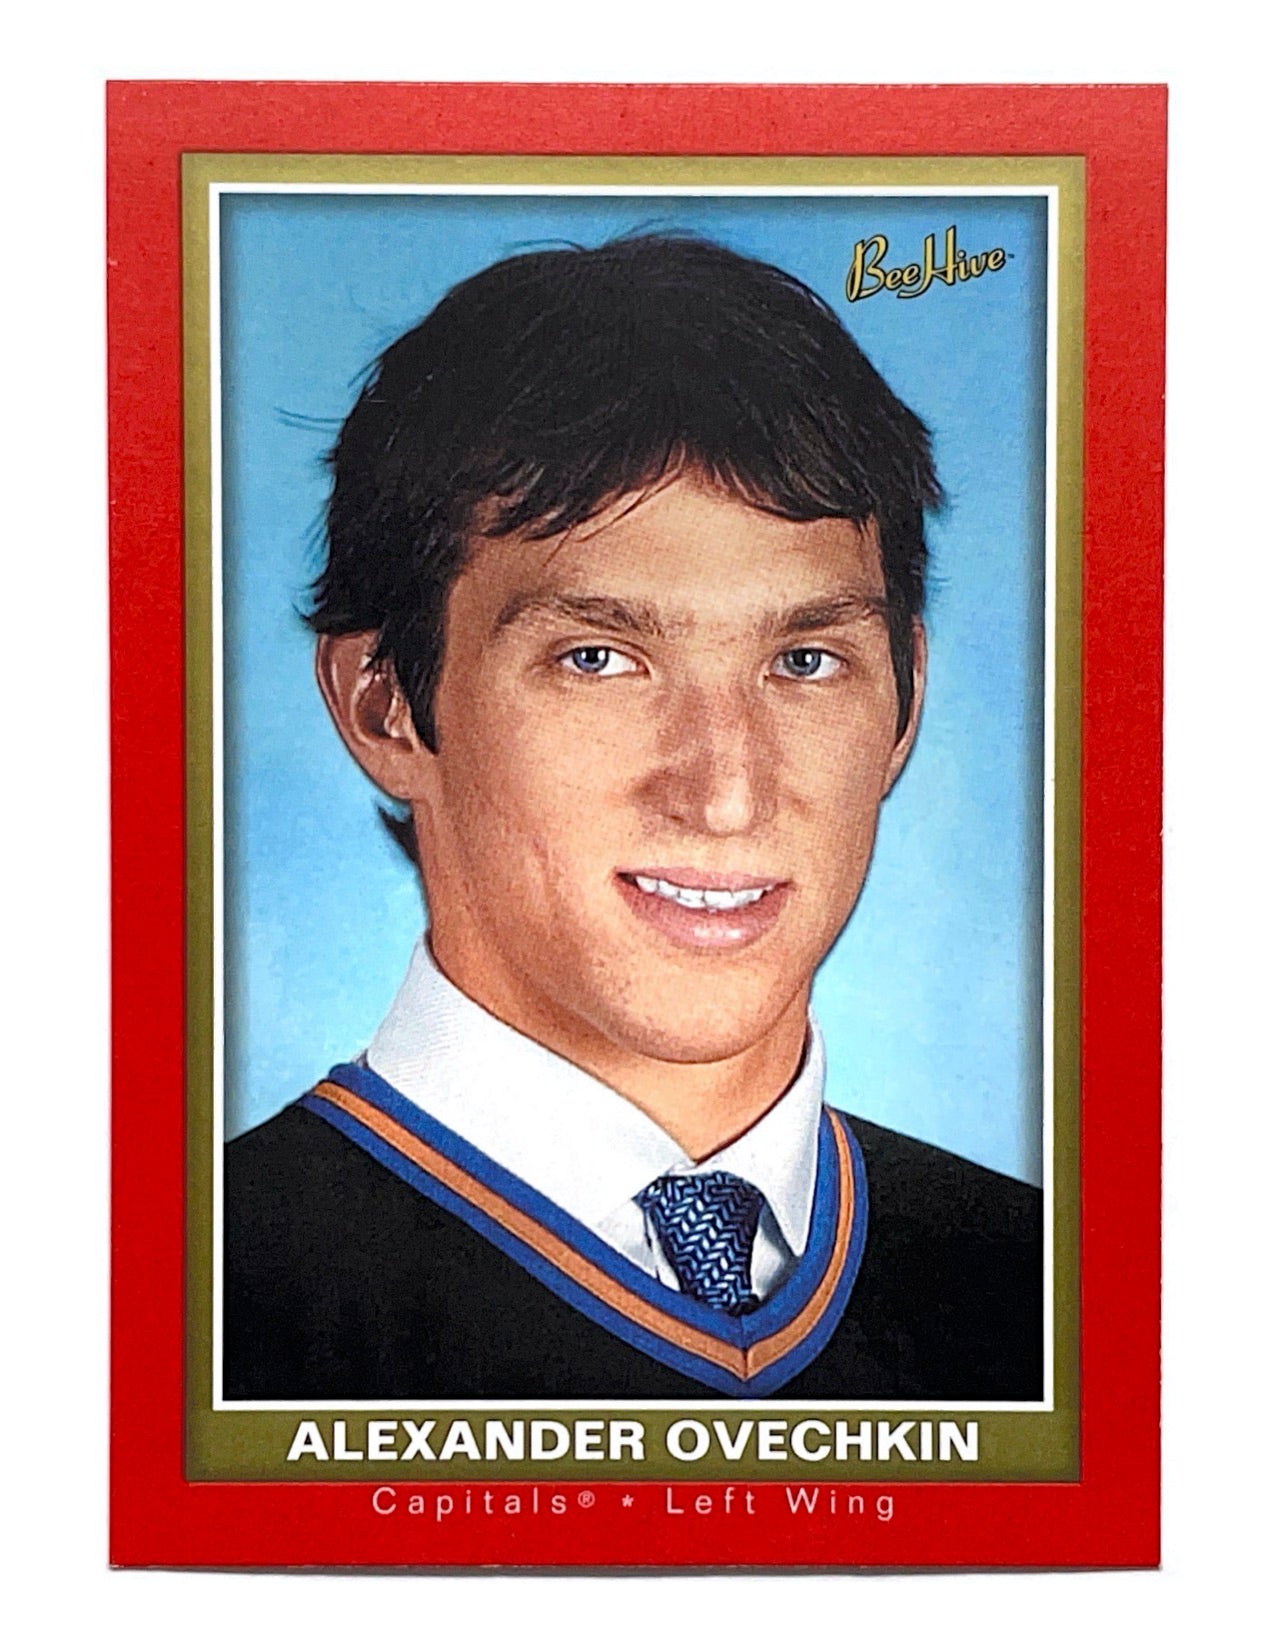 Alexander Ovechkin 2005-06 Upper Deck Bee Hive Red Portrait Rookie #102